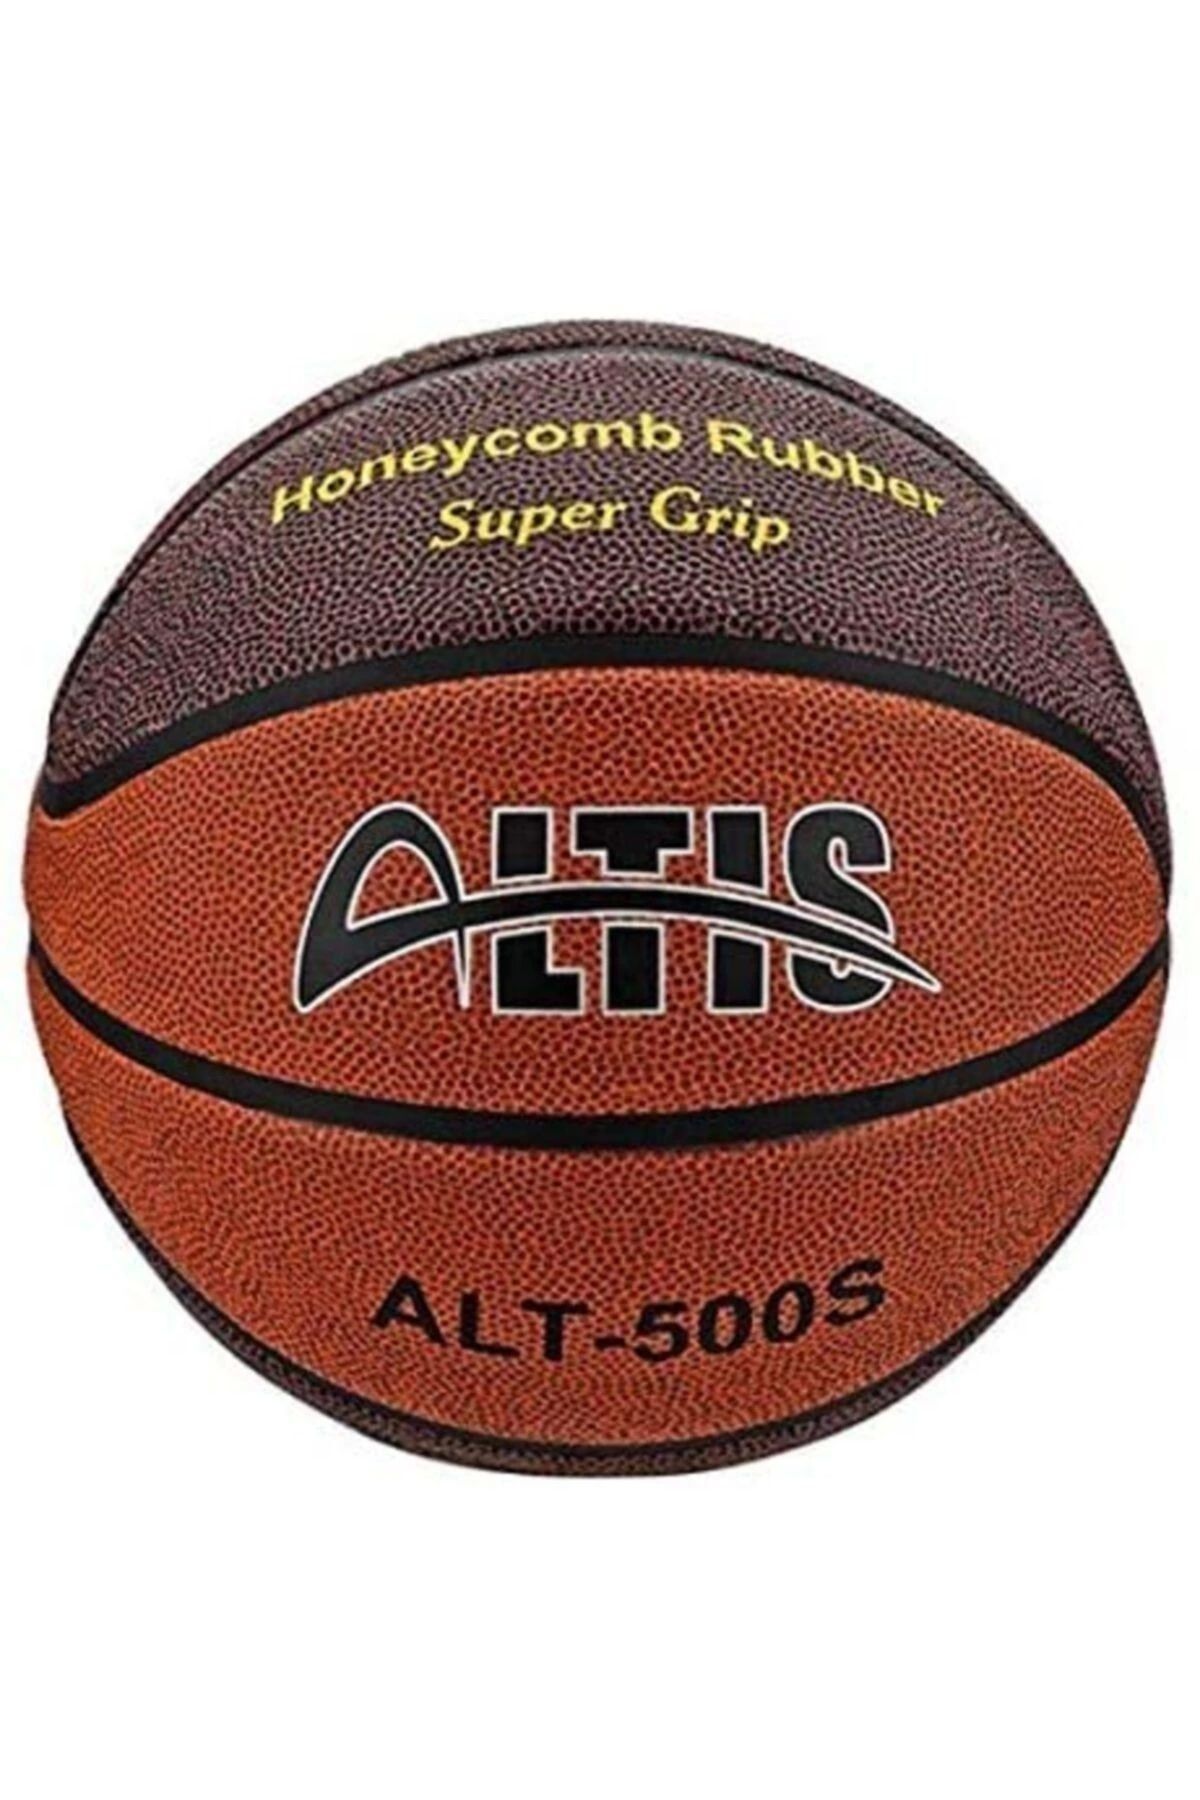 ALTIS Alt-500s Super Grip Basketbol Topu - Basket Topu - 5 No